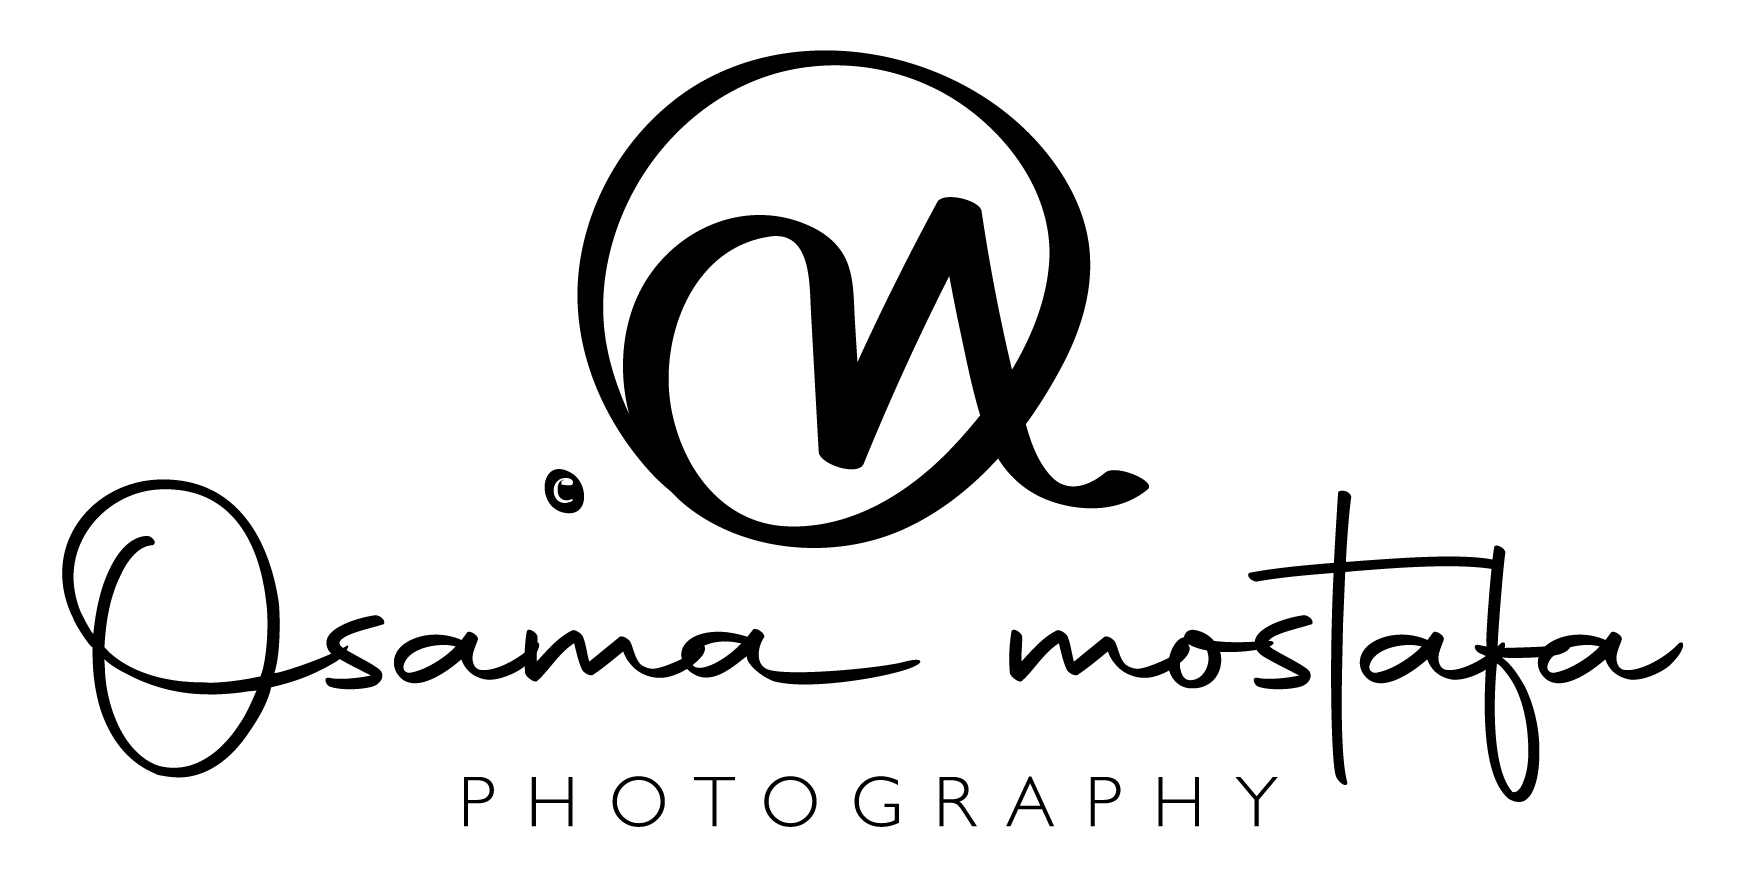 Osama Mostafa Photography